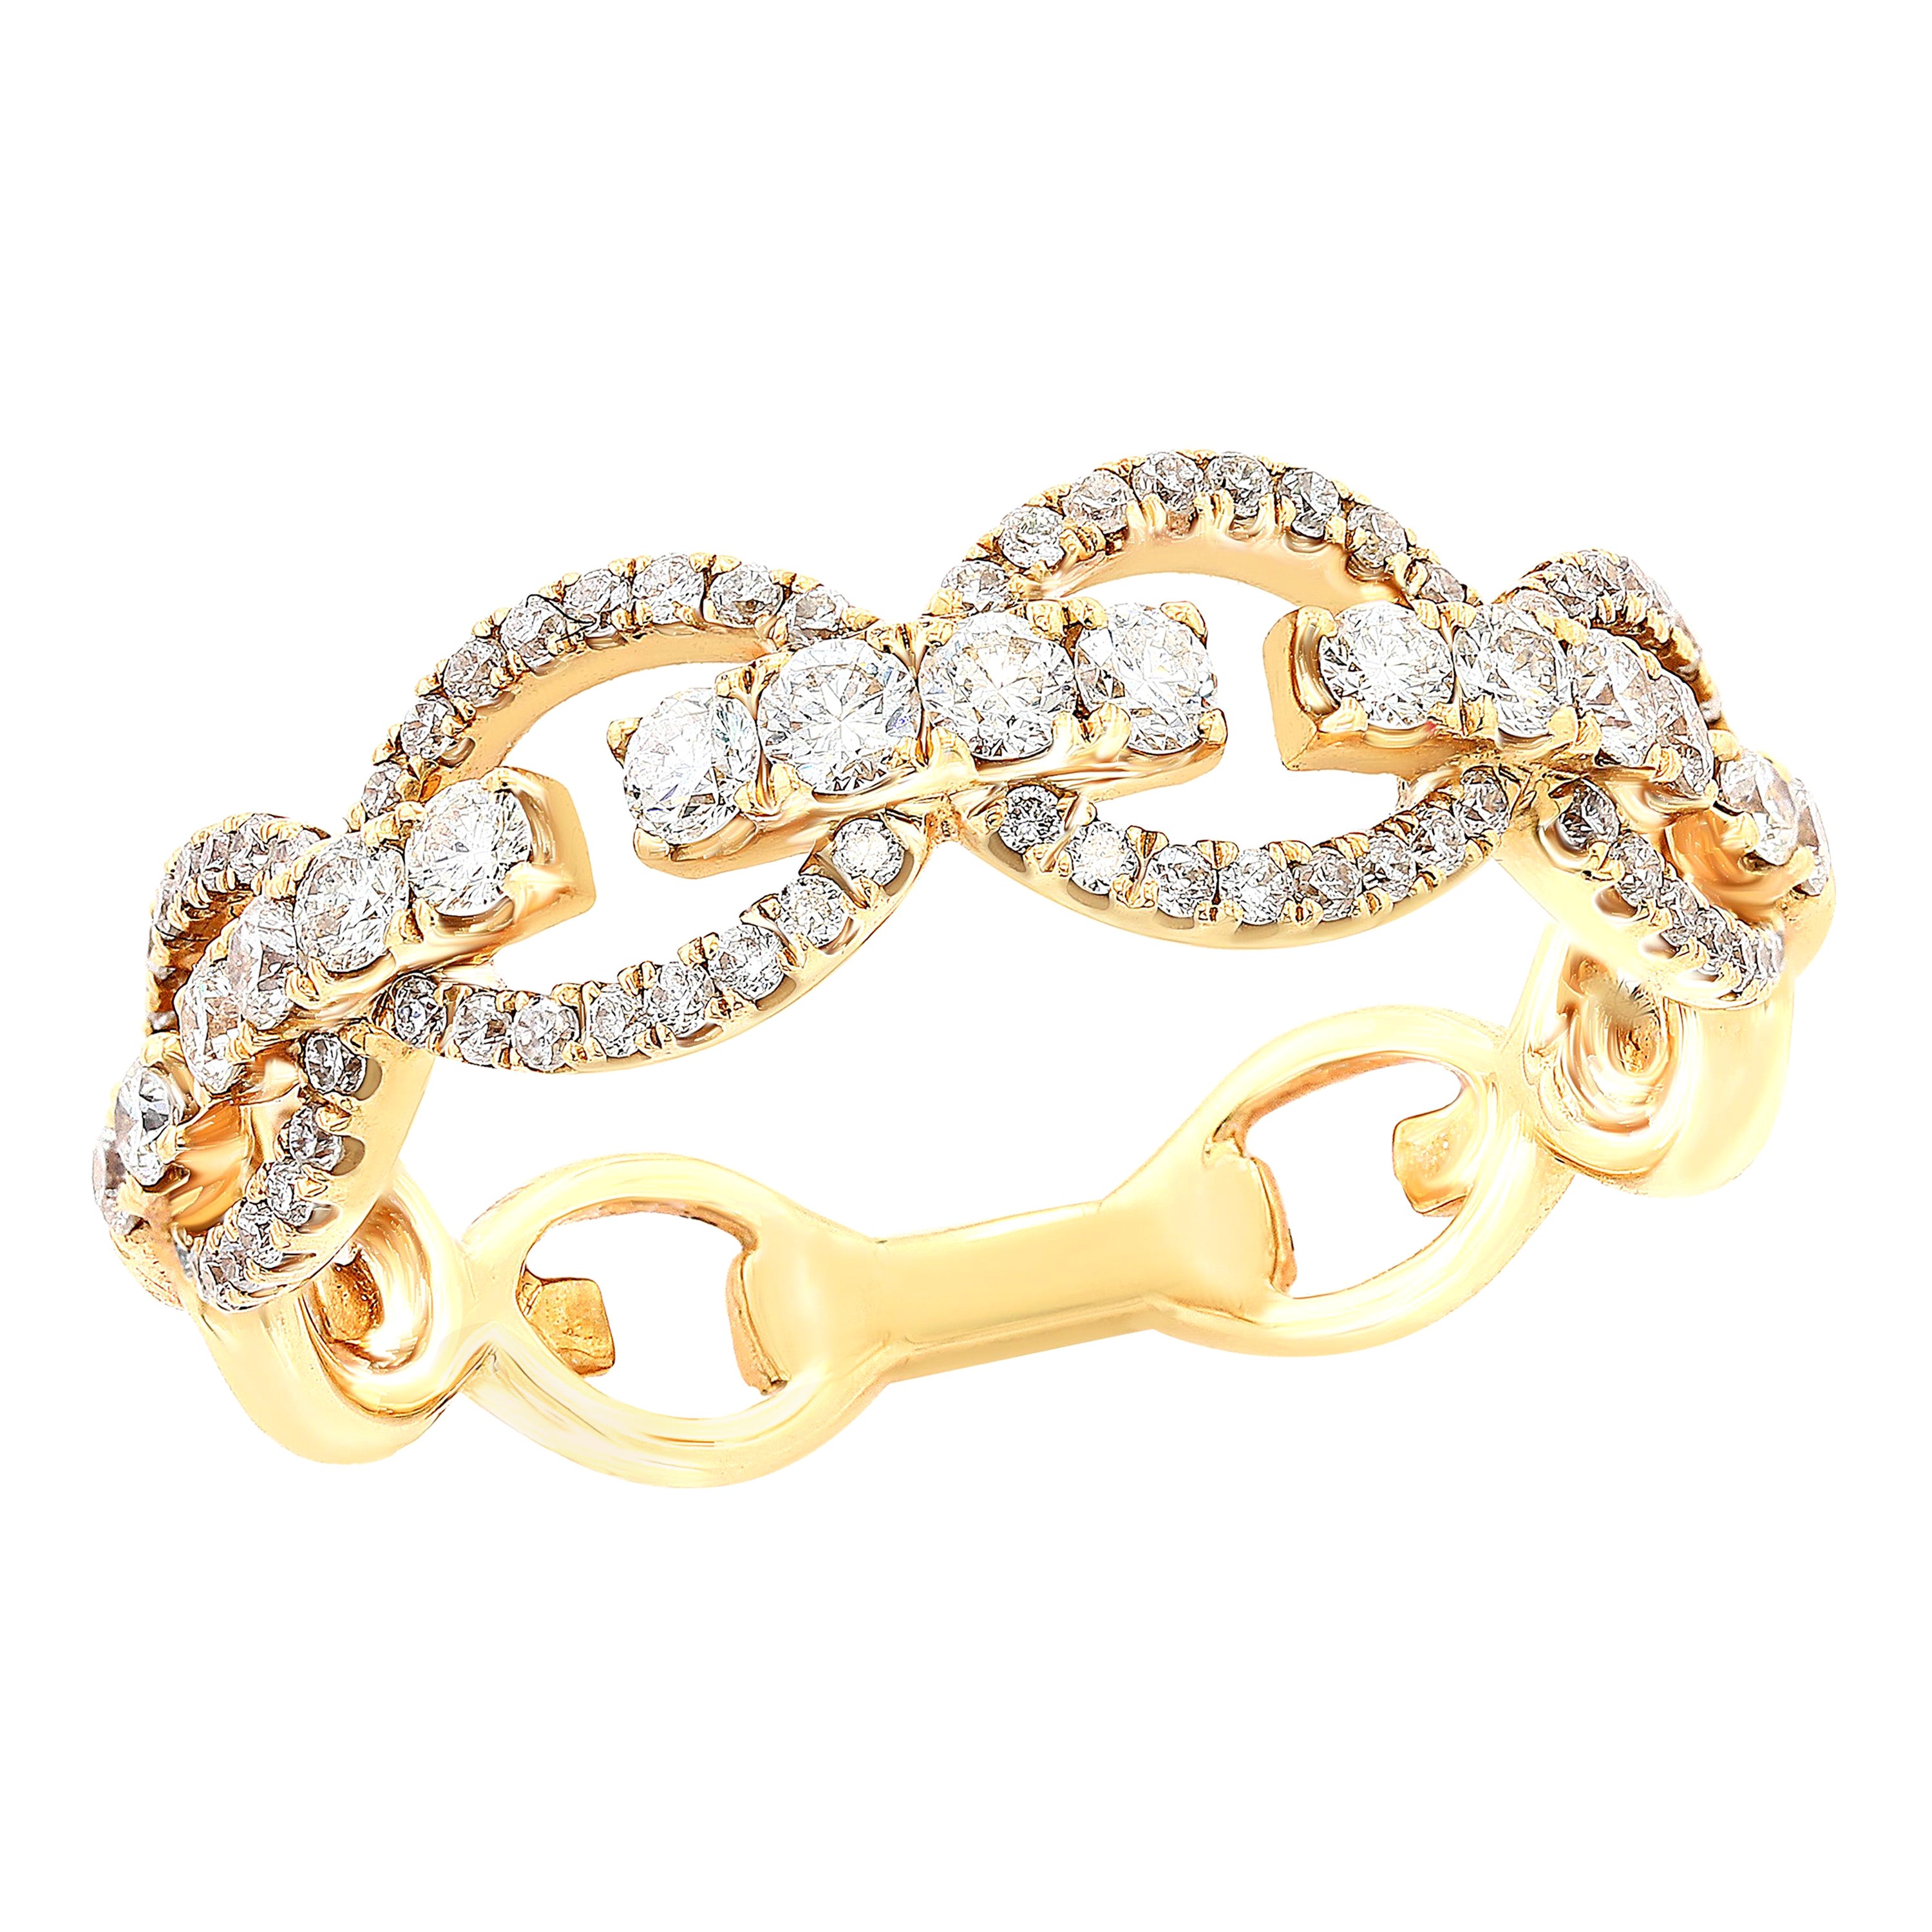 0.51 Carat Round Diamond 18K Yellow Gold Fashion Ring